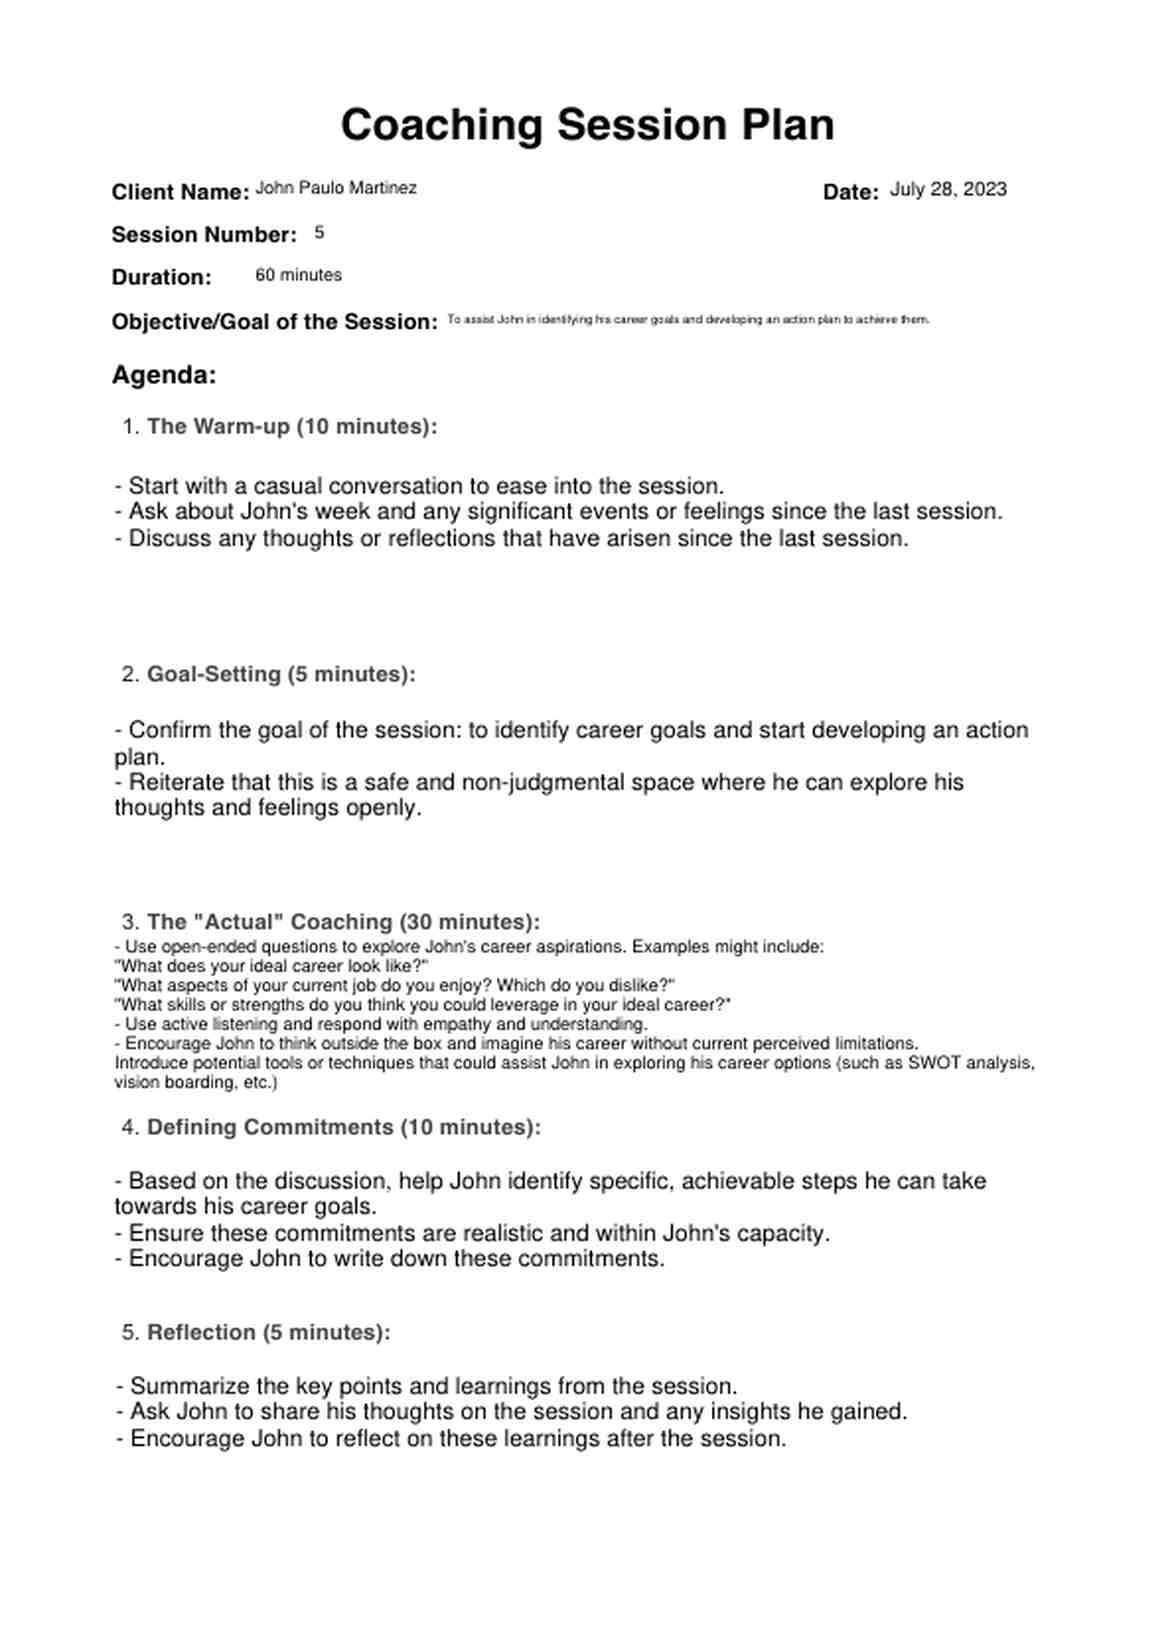 Coaching Session Plan PDF Example